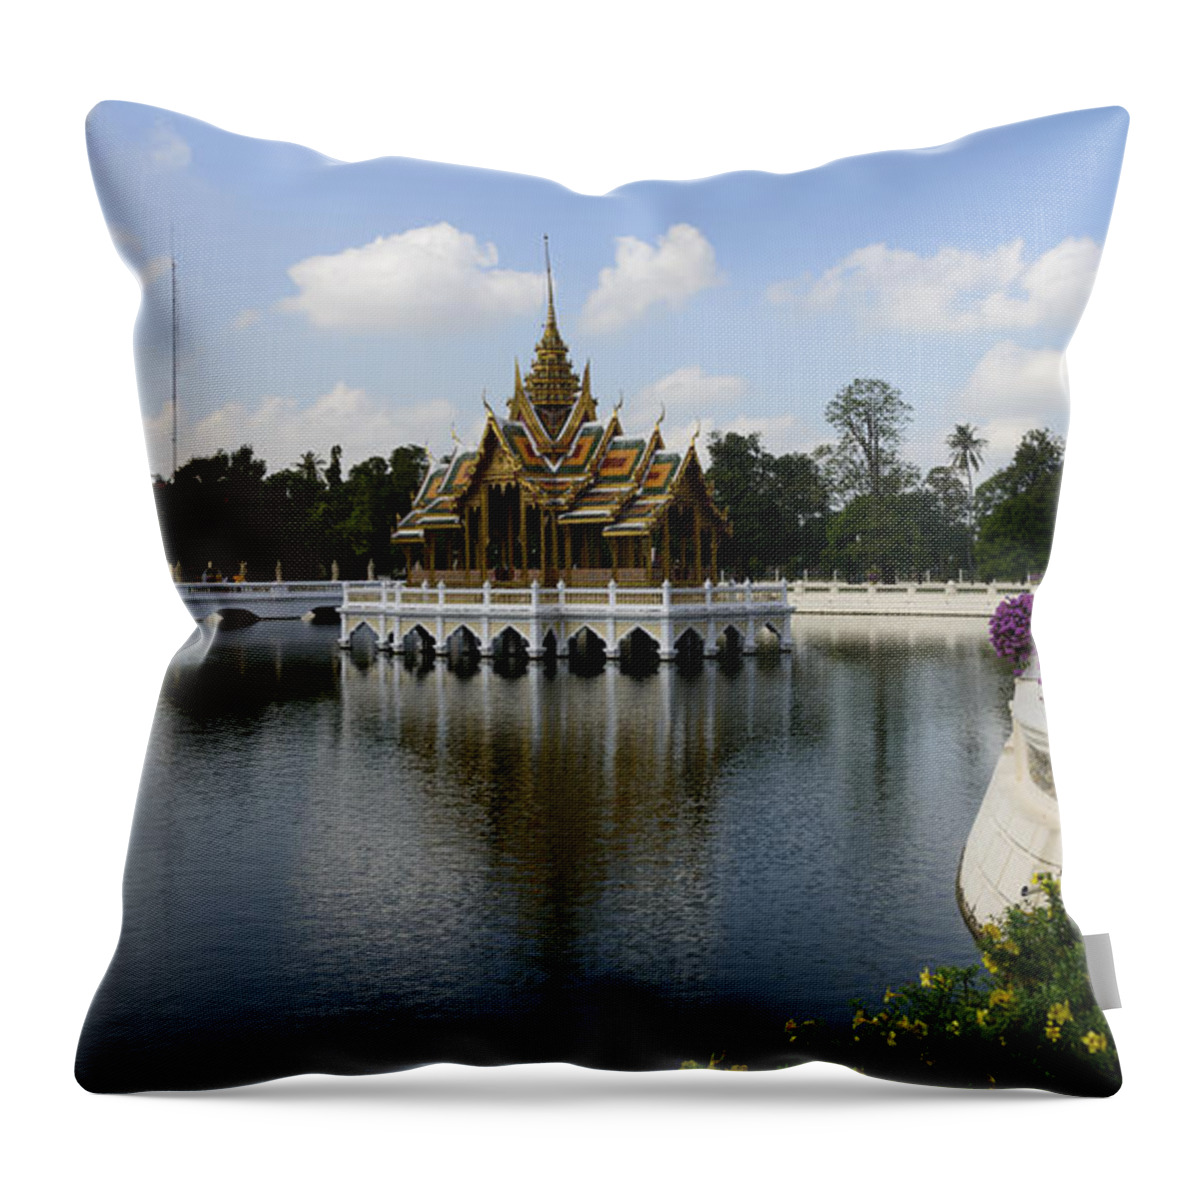 Summer Palace Throw Pillow featuring the photograph The Summer Palace by Bob VonDrachek